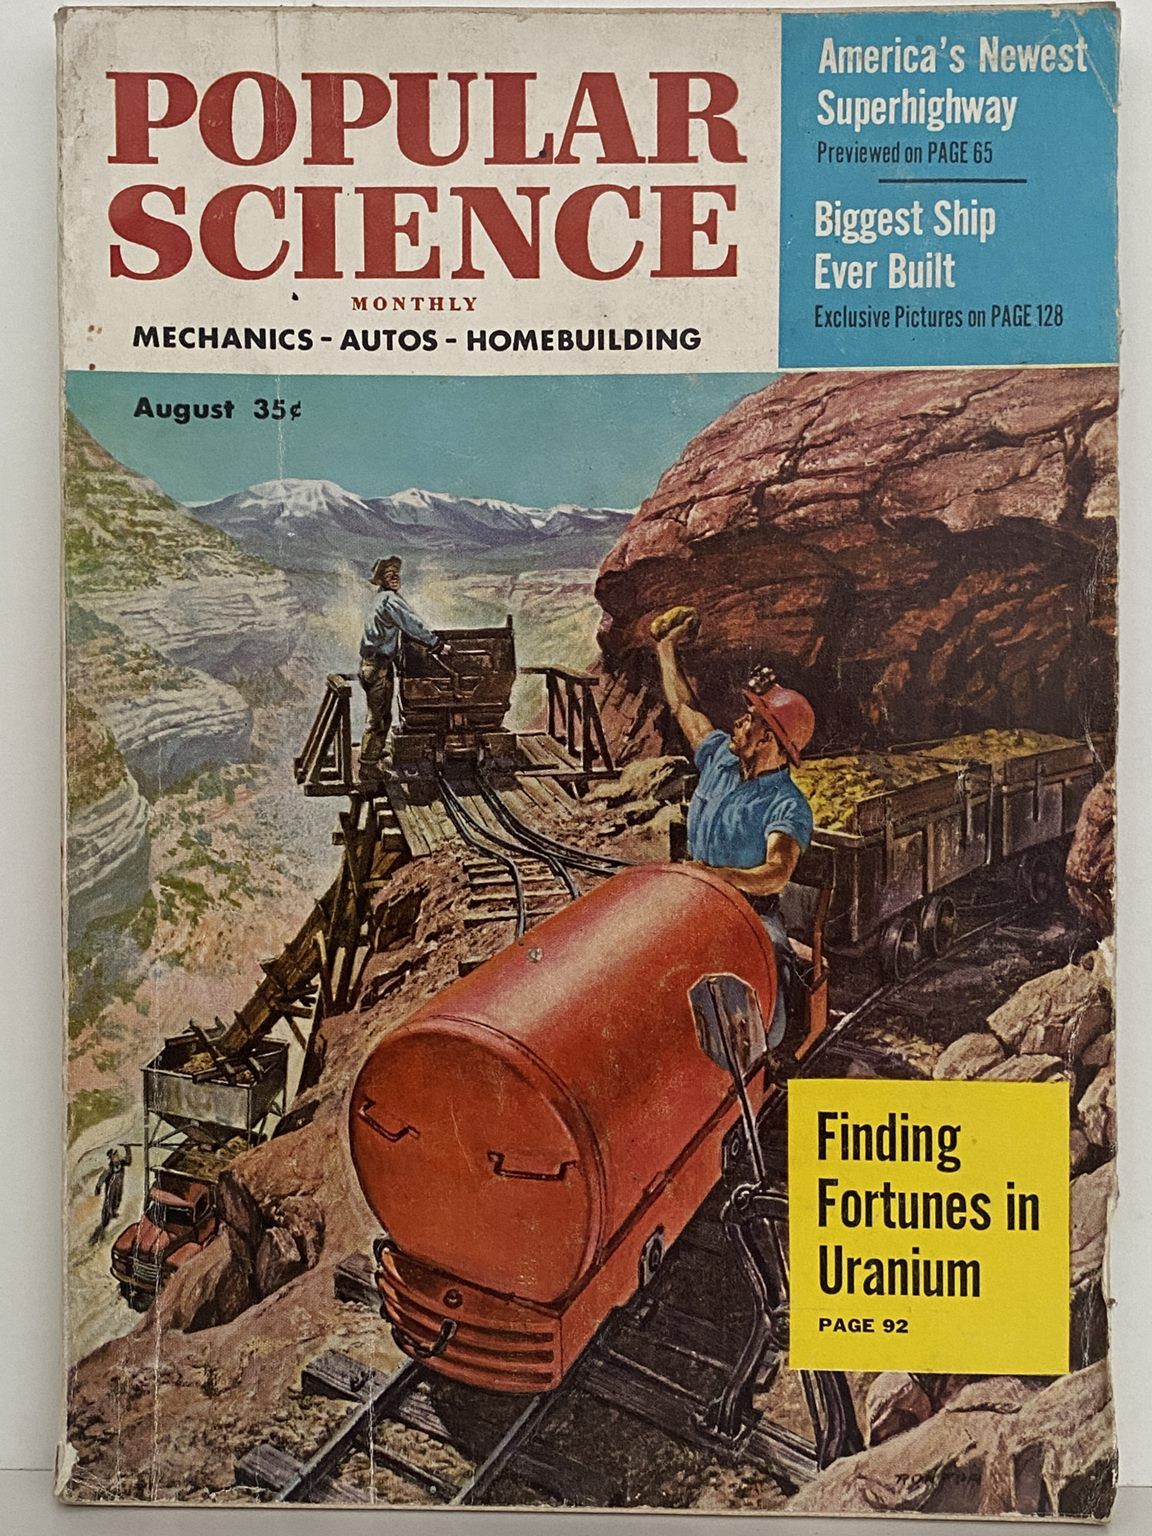 VINTAGE MAGAZINE: Popular Science - August 1954